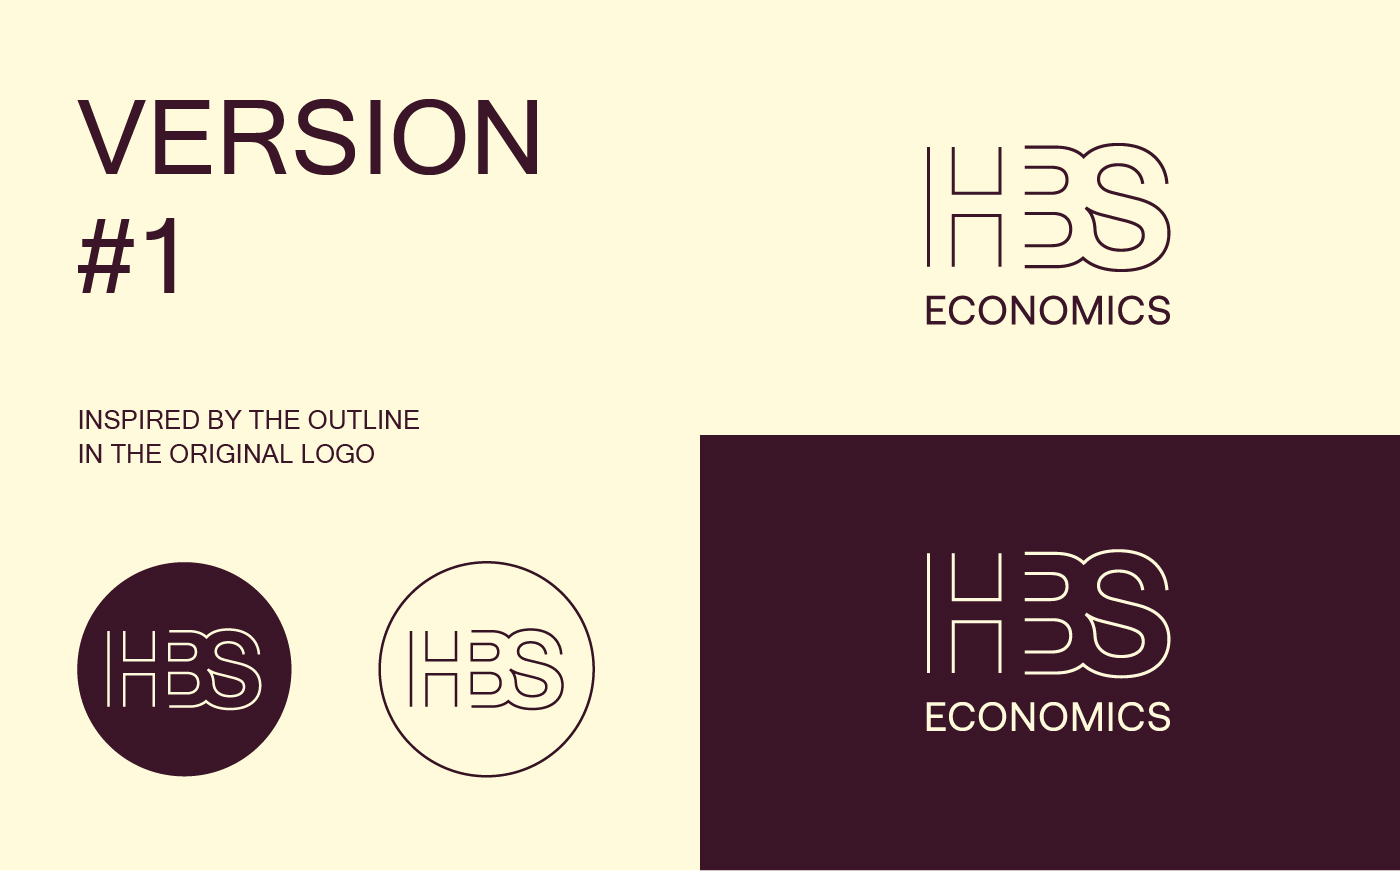 HBS Economic new logo version 1